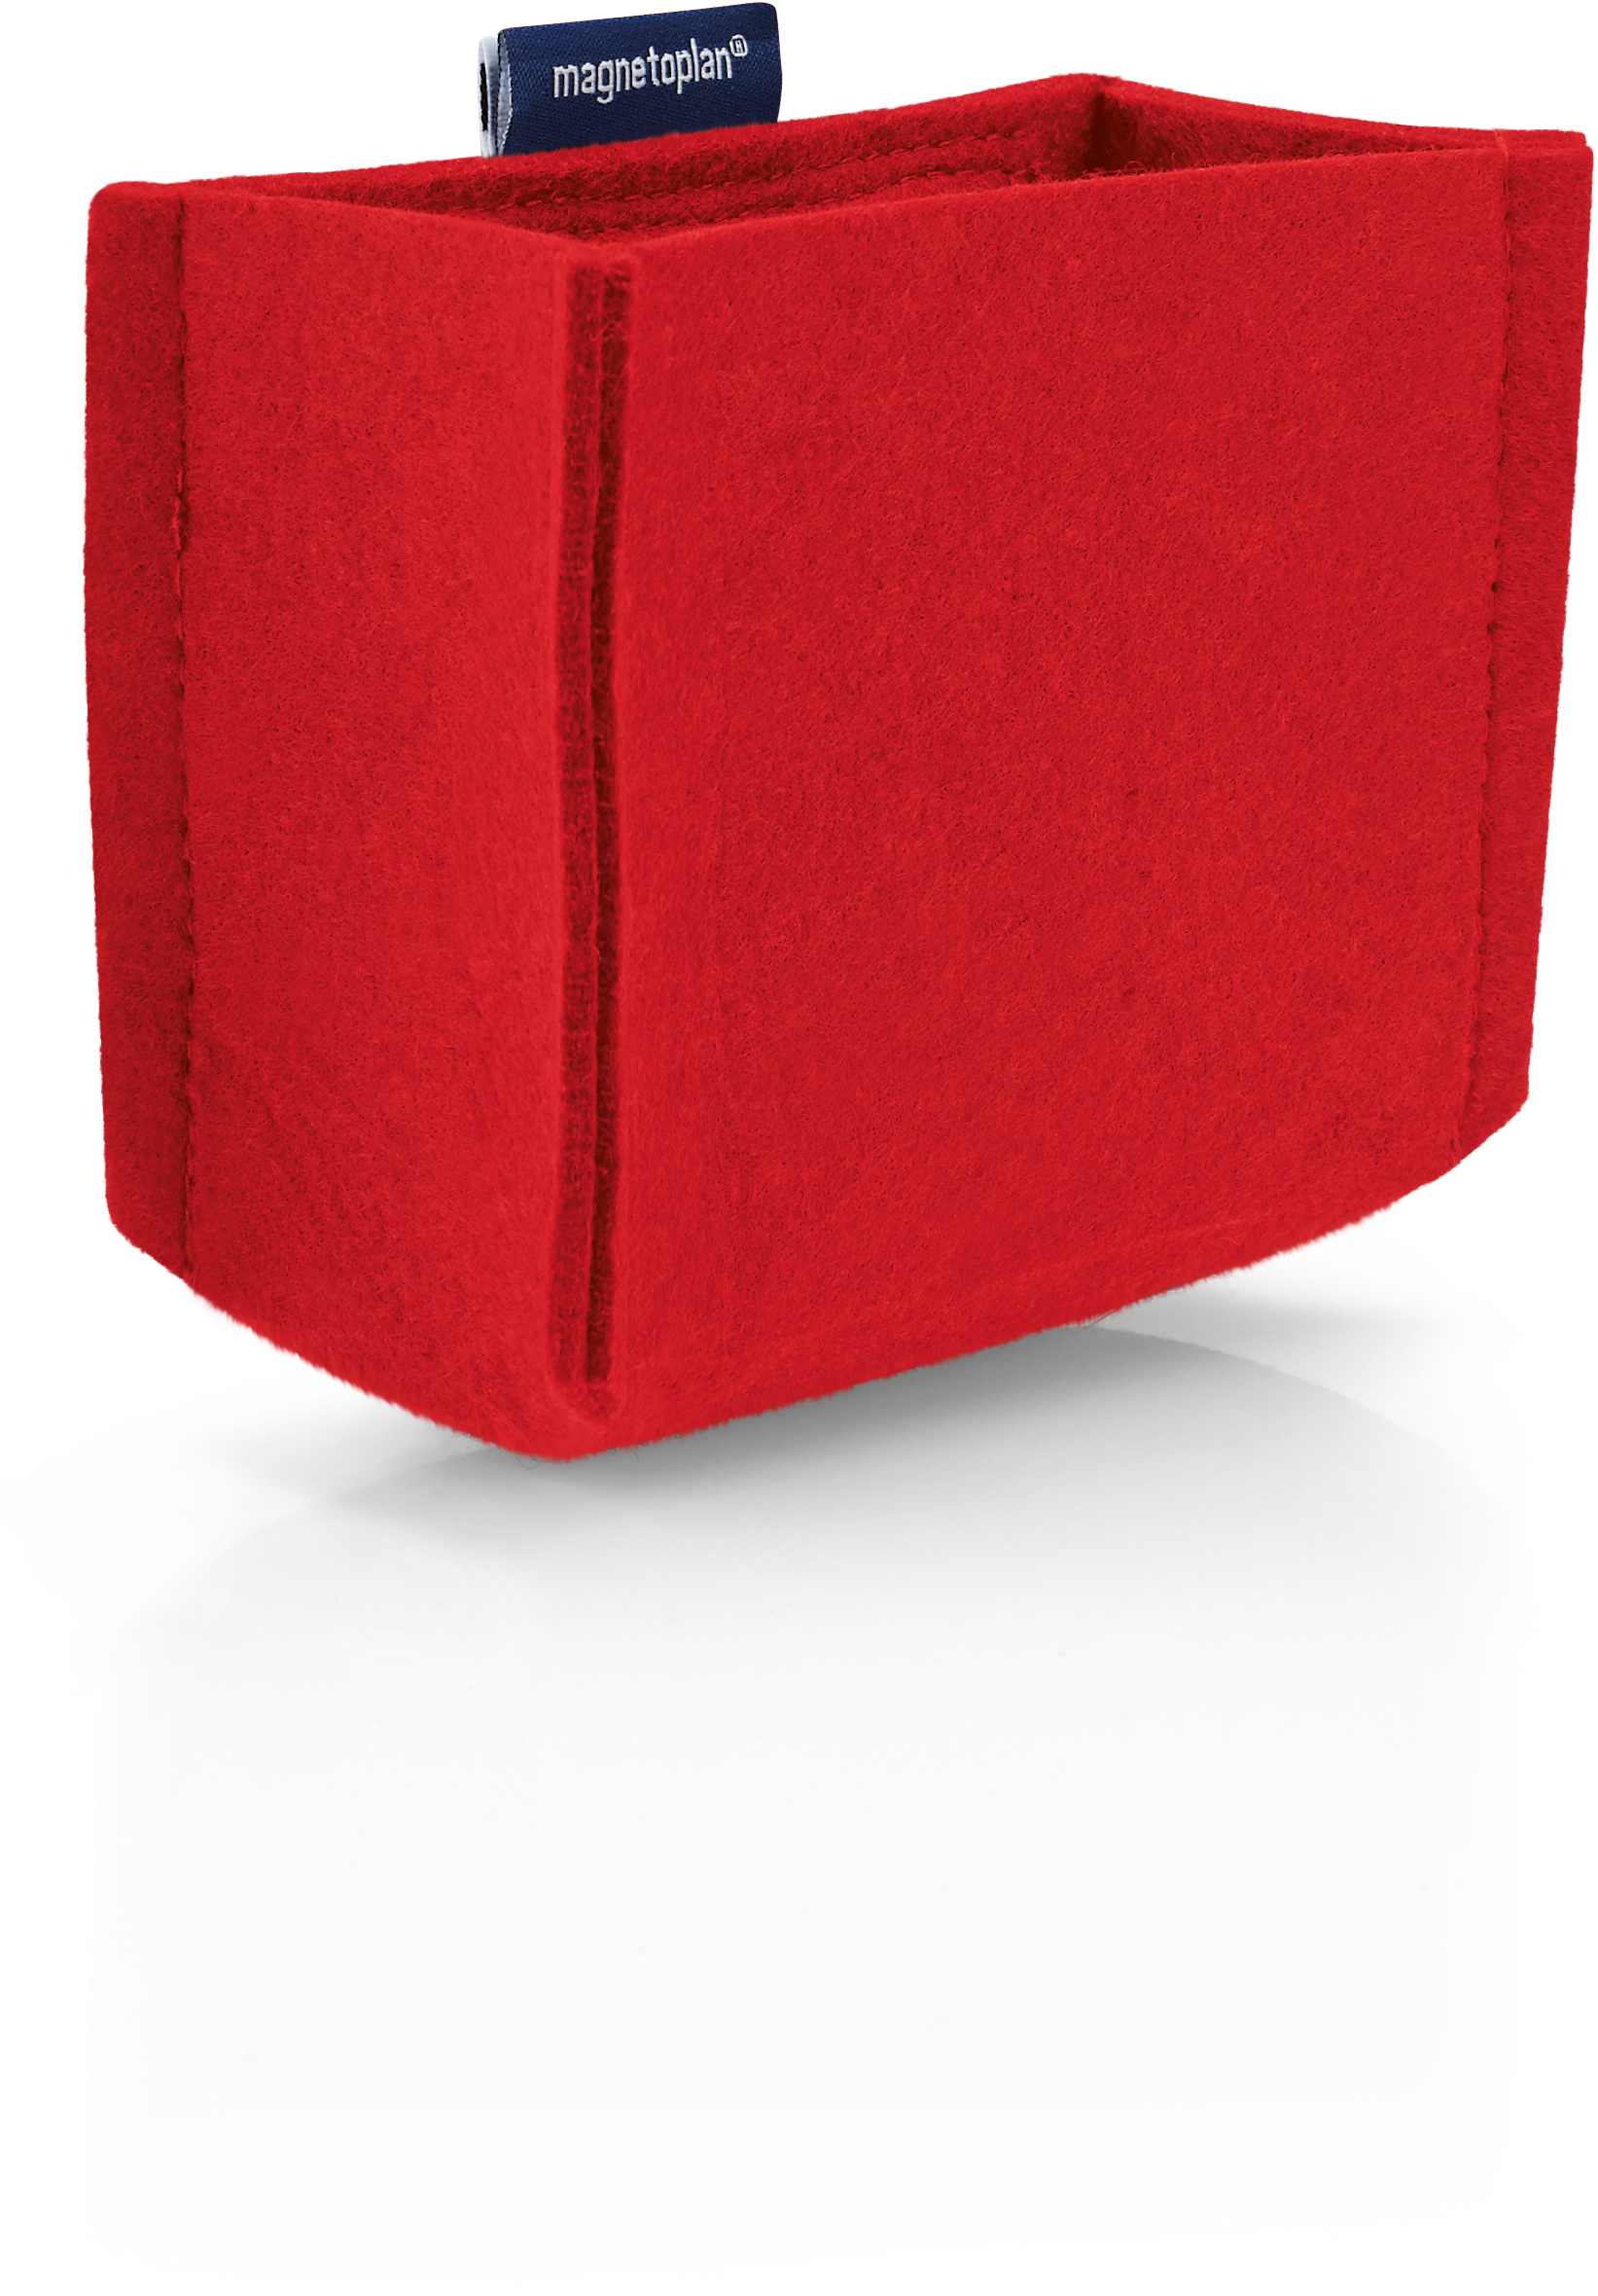 MAGNETOPLAN Porte stylo magnetoTray M 1227706 rouge, feutre recyclé